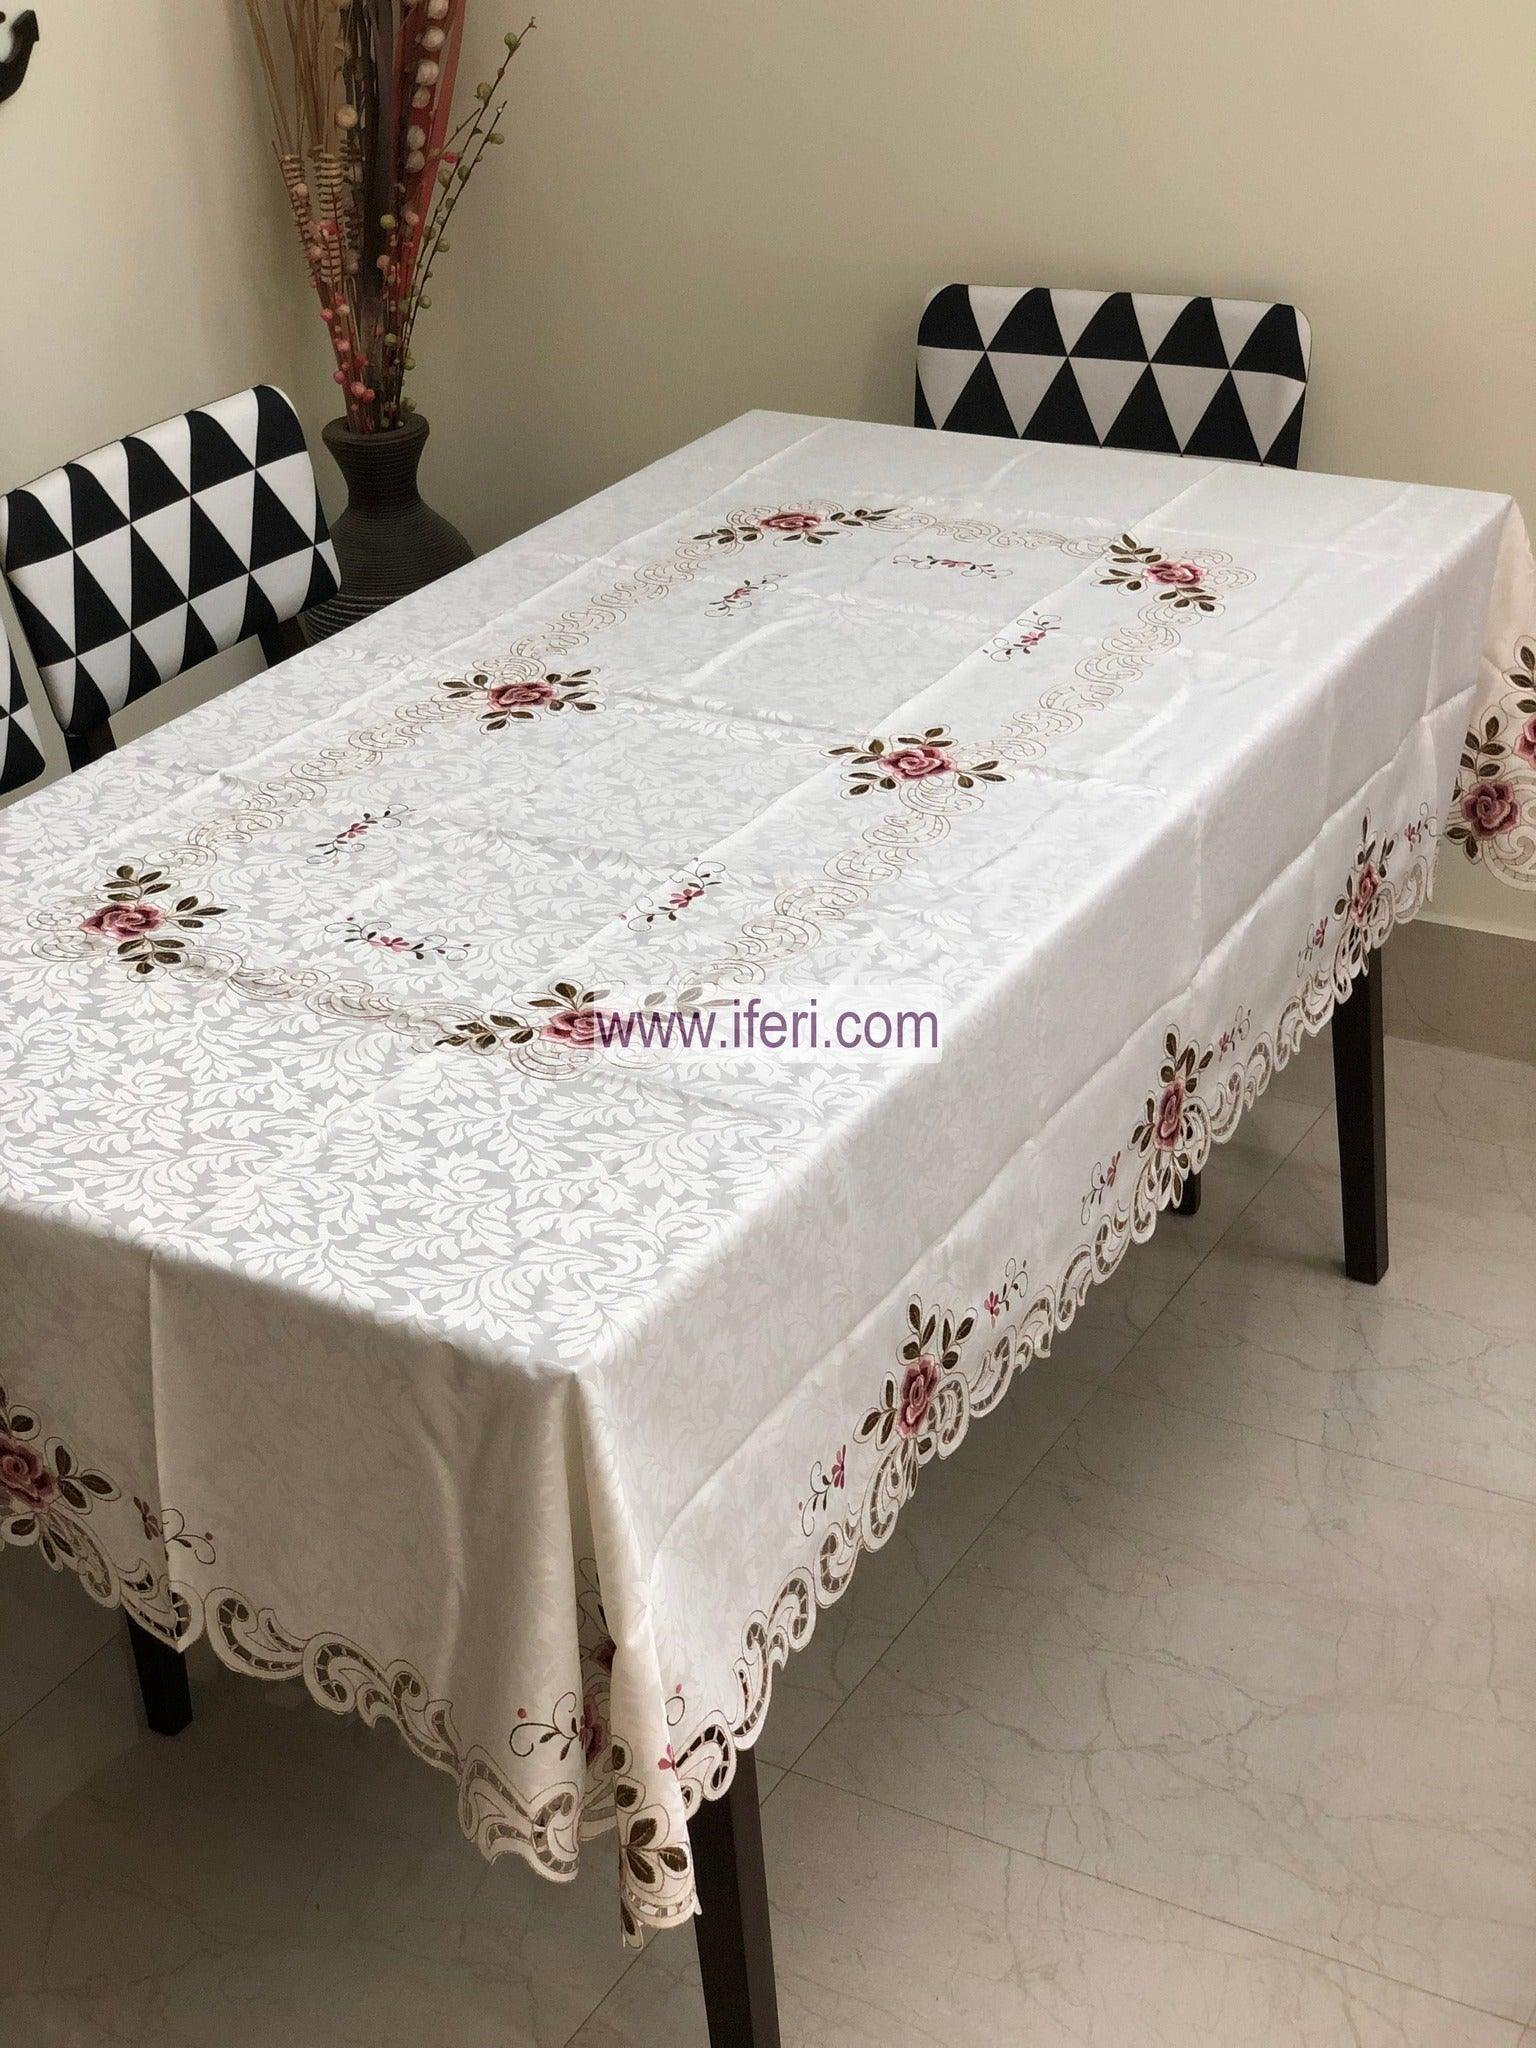 Exclusive Table Cloth RJ42120 Price in Bangladesh - iferi.com